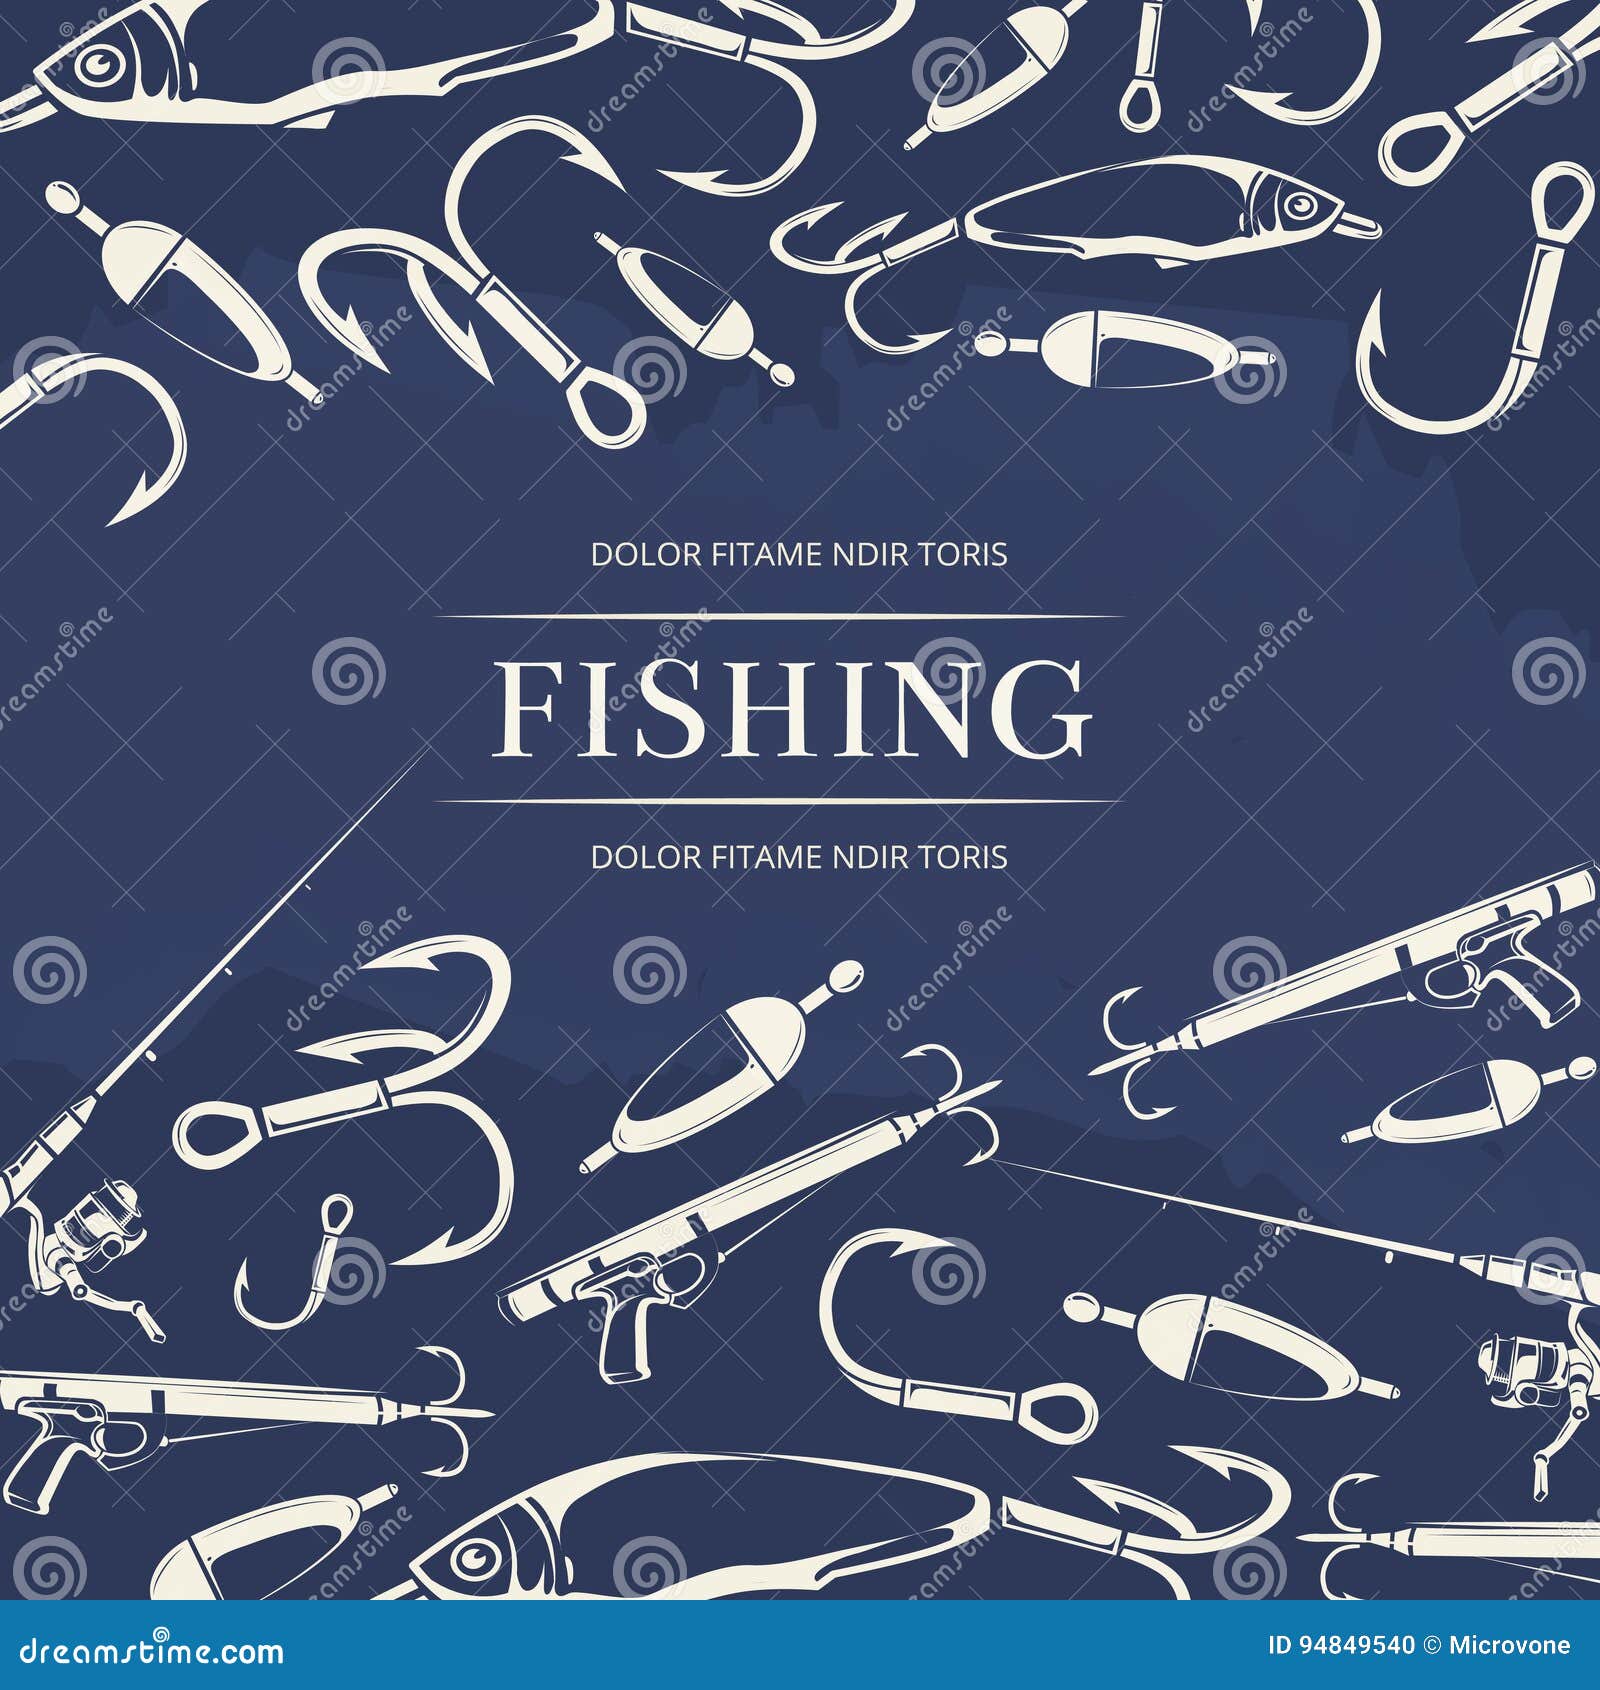 https://thumbs.dreamstime.com/z/fishing-poster-hook-fishing-rod-gun-fish-vector-illustration-94849540.jpg